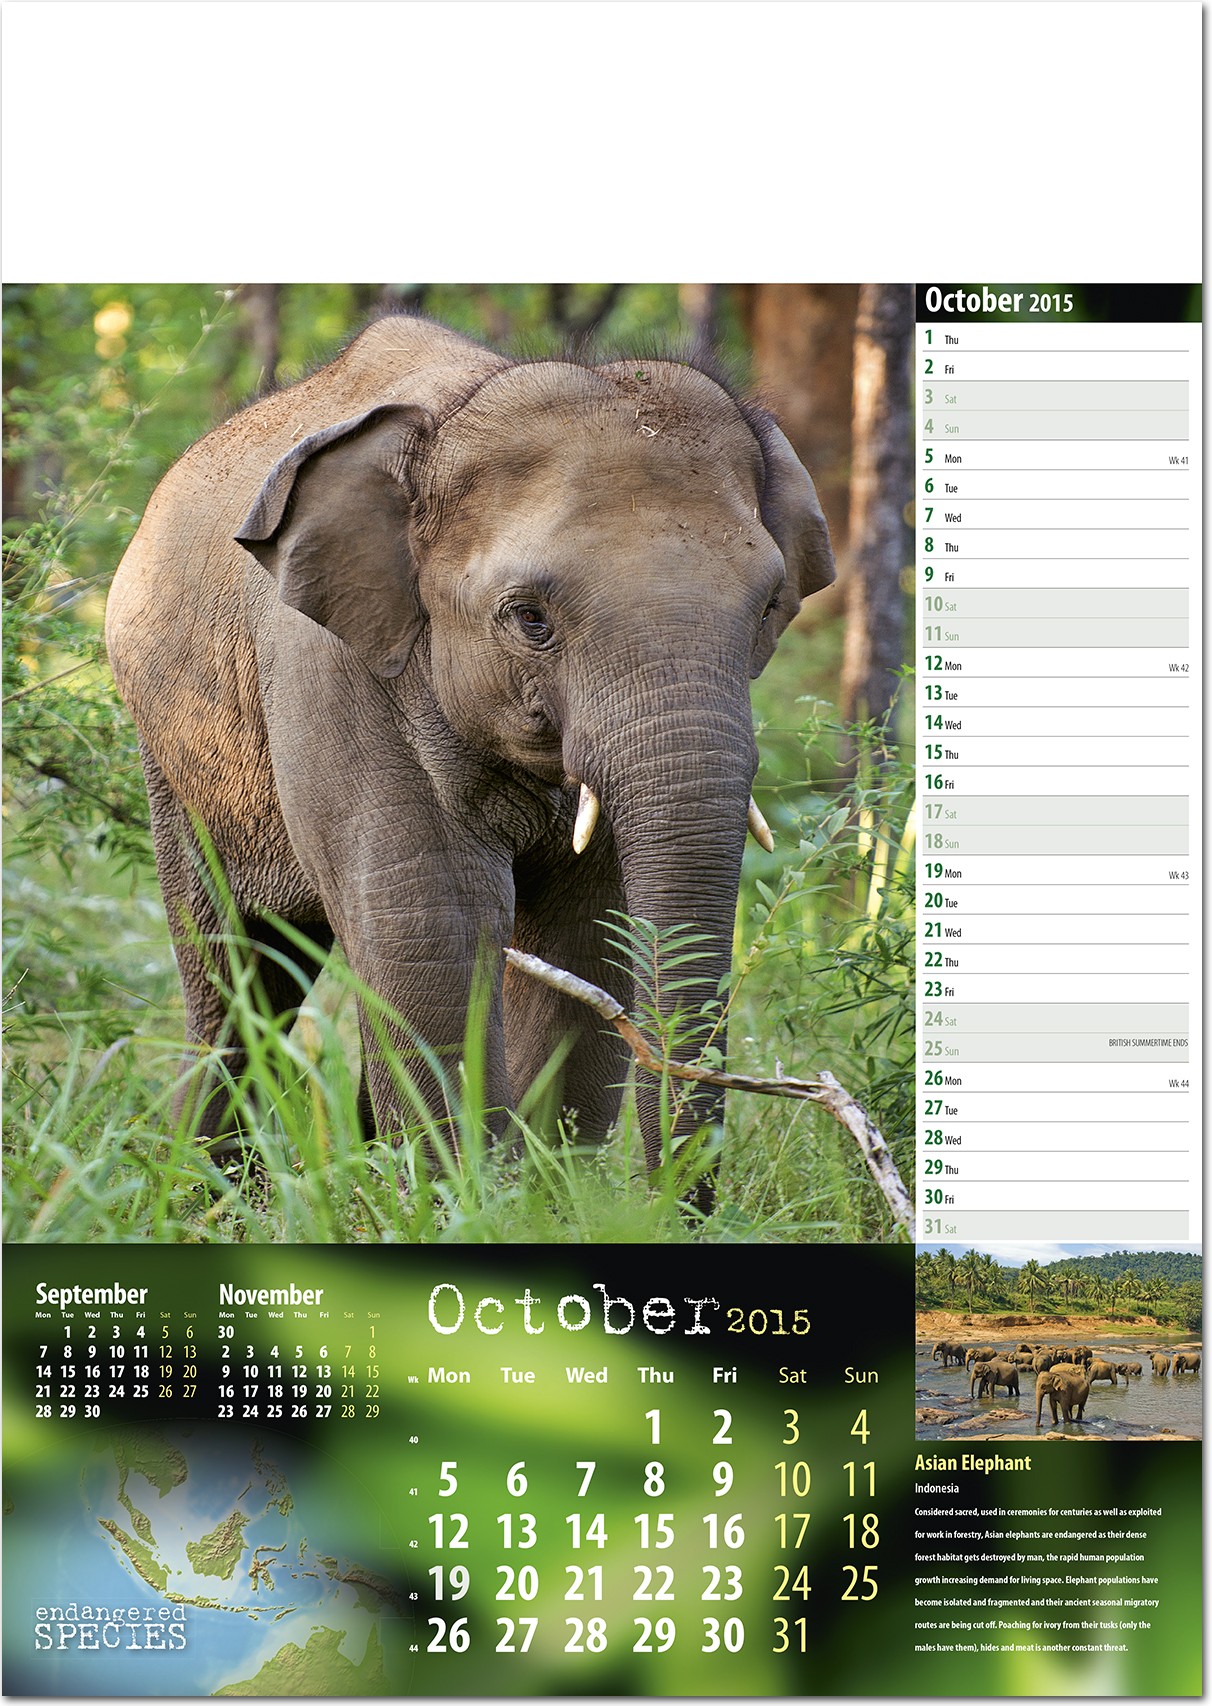 Endangered Species Calendar 2016 - Rose Calendars